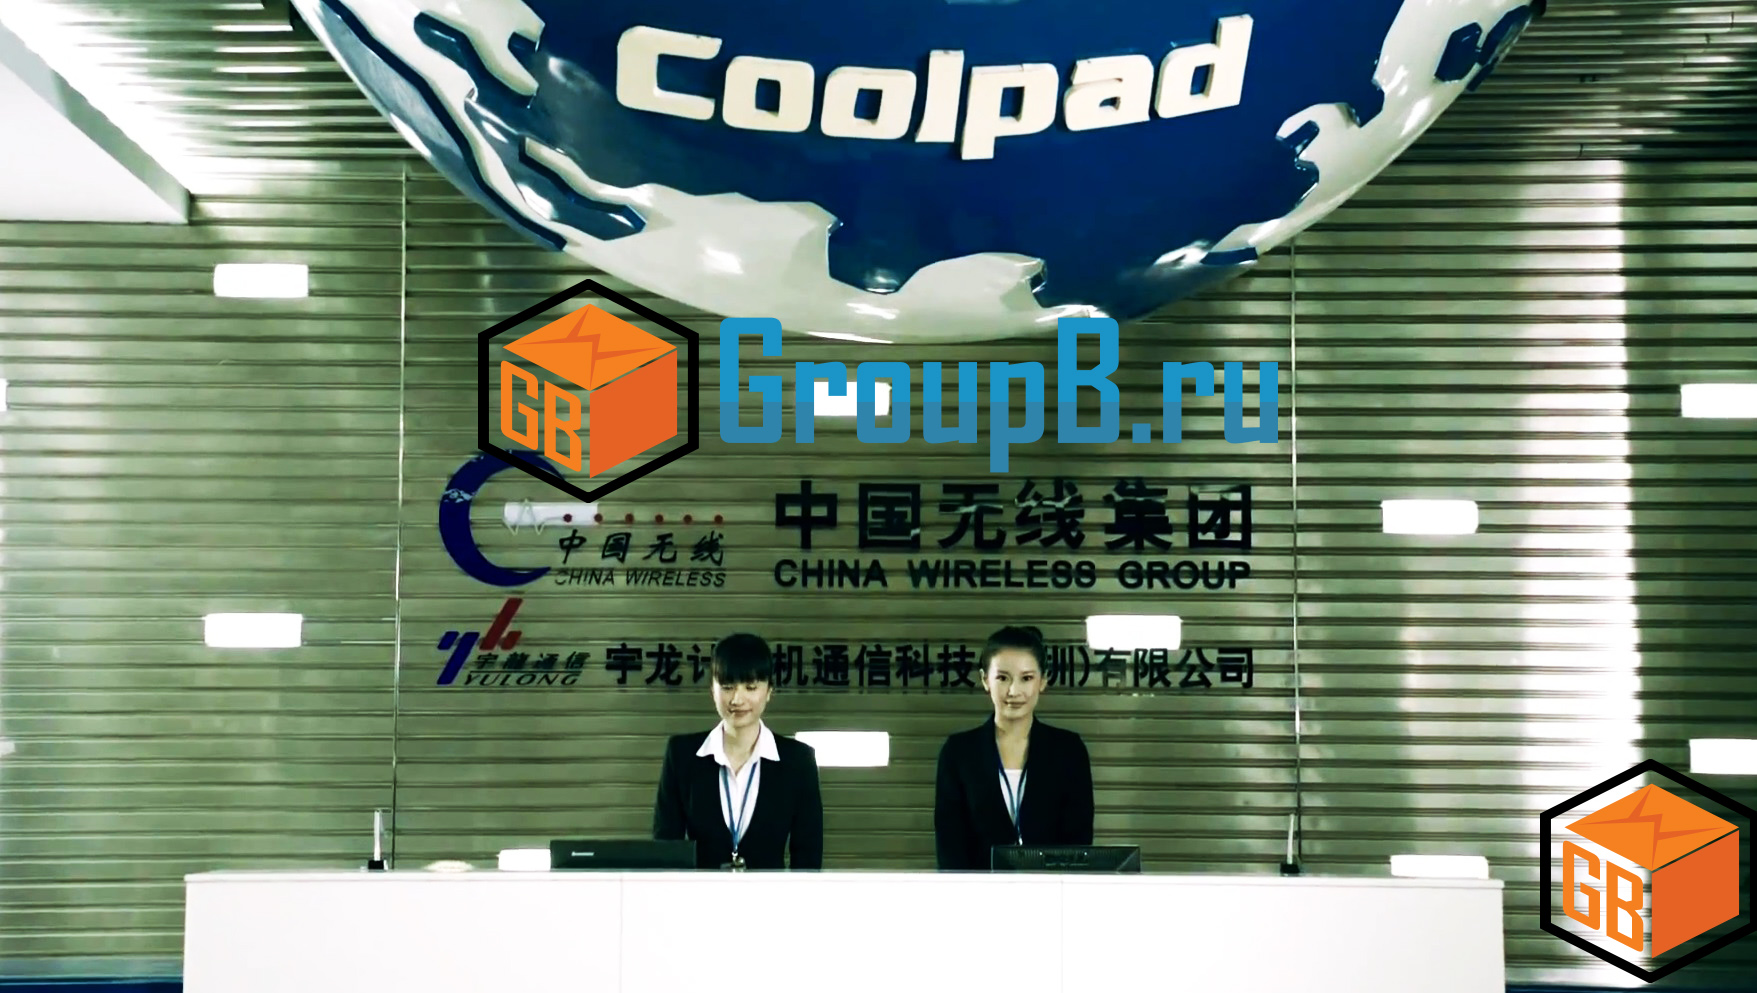 coolpad company